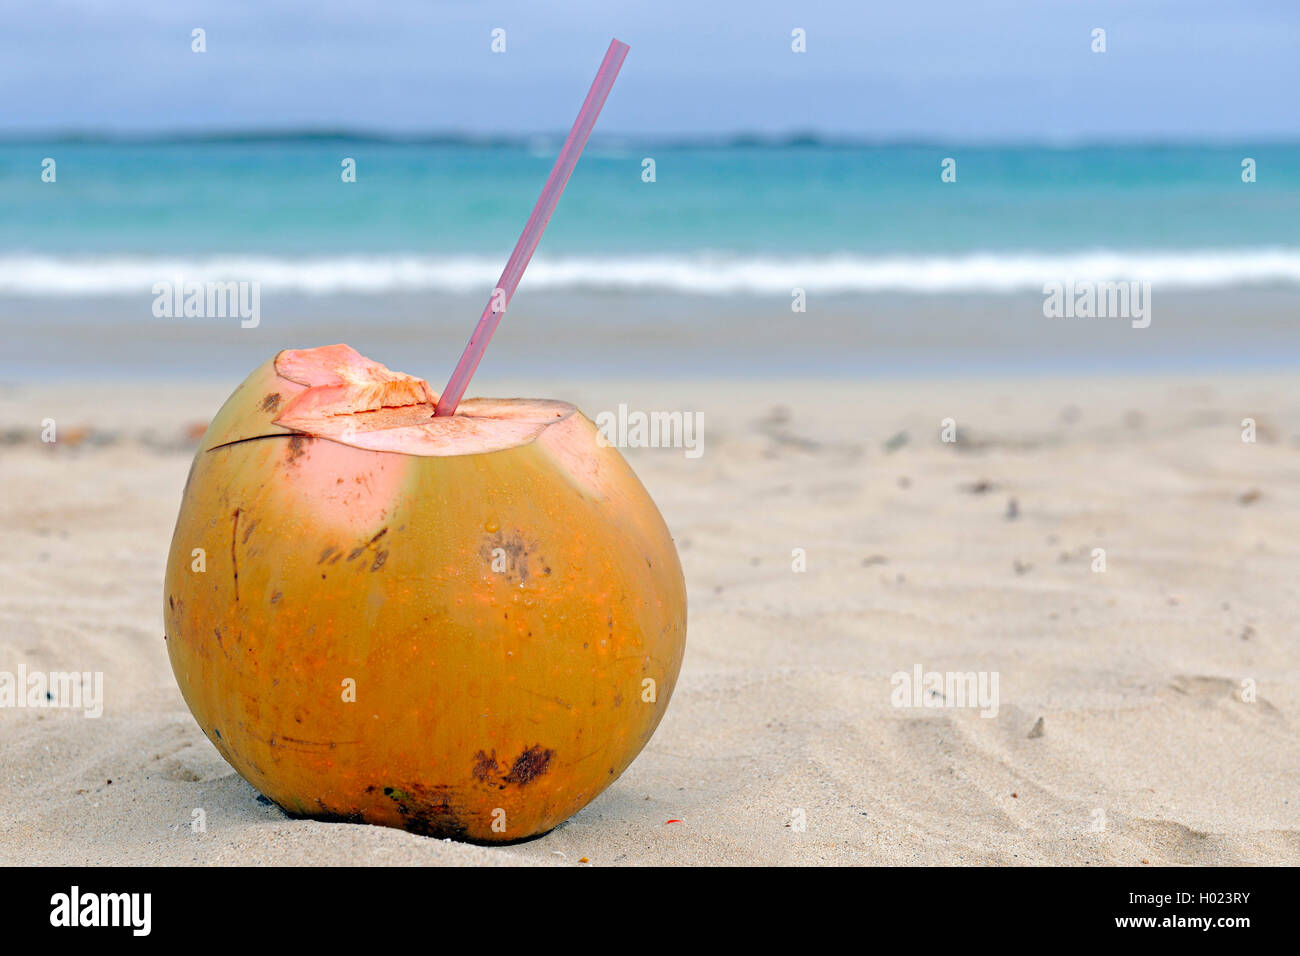 Frische Kokosnuss mit einem une Trinkhalm liegt tropischen Strand, Equateur, Galapagos-Inseln | noix de coco fraîche avec paille Banque D'Images